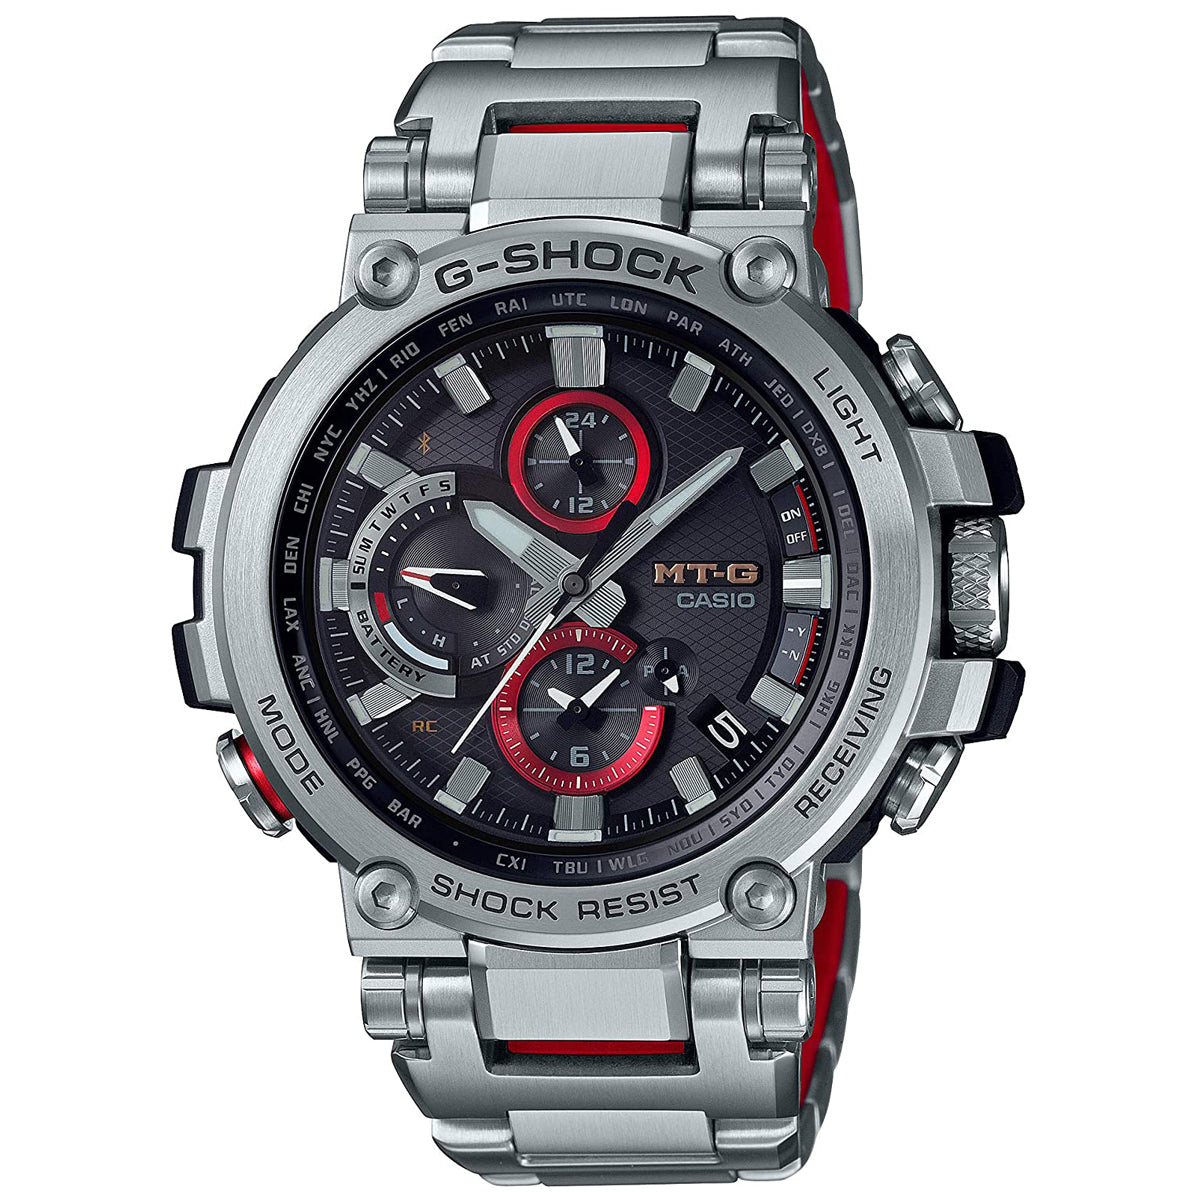 Casio G-Shock MT-G MTG-S1000 $1,000 Metal Watches Hands-On | aBlogtoWatch